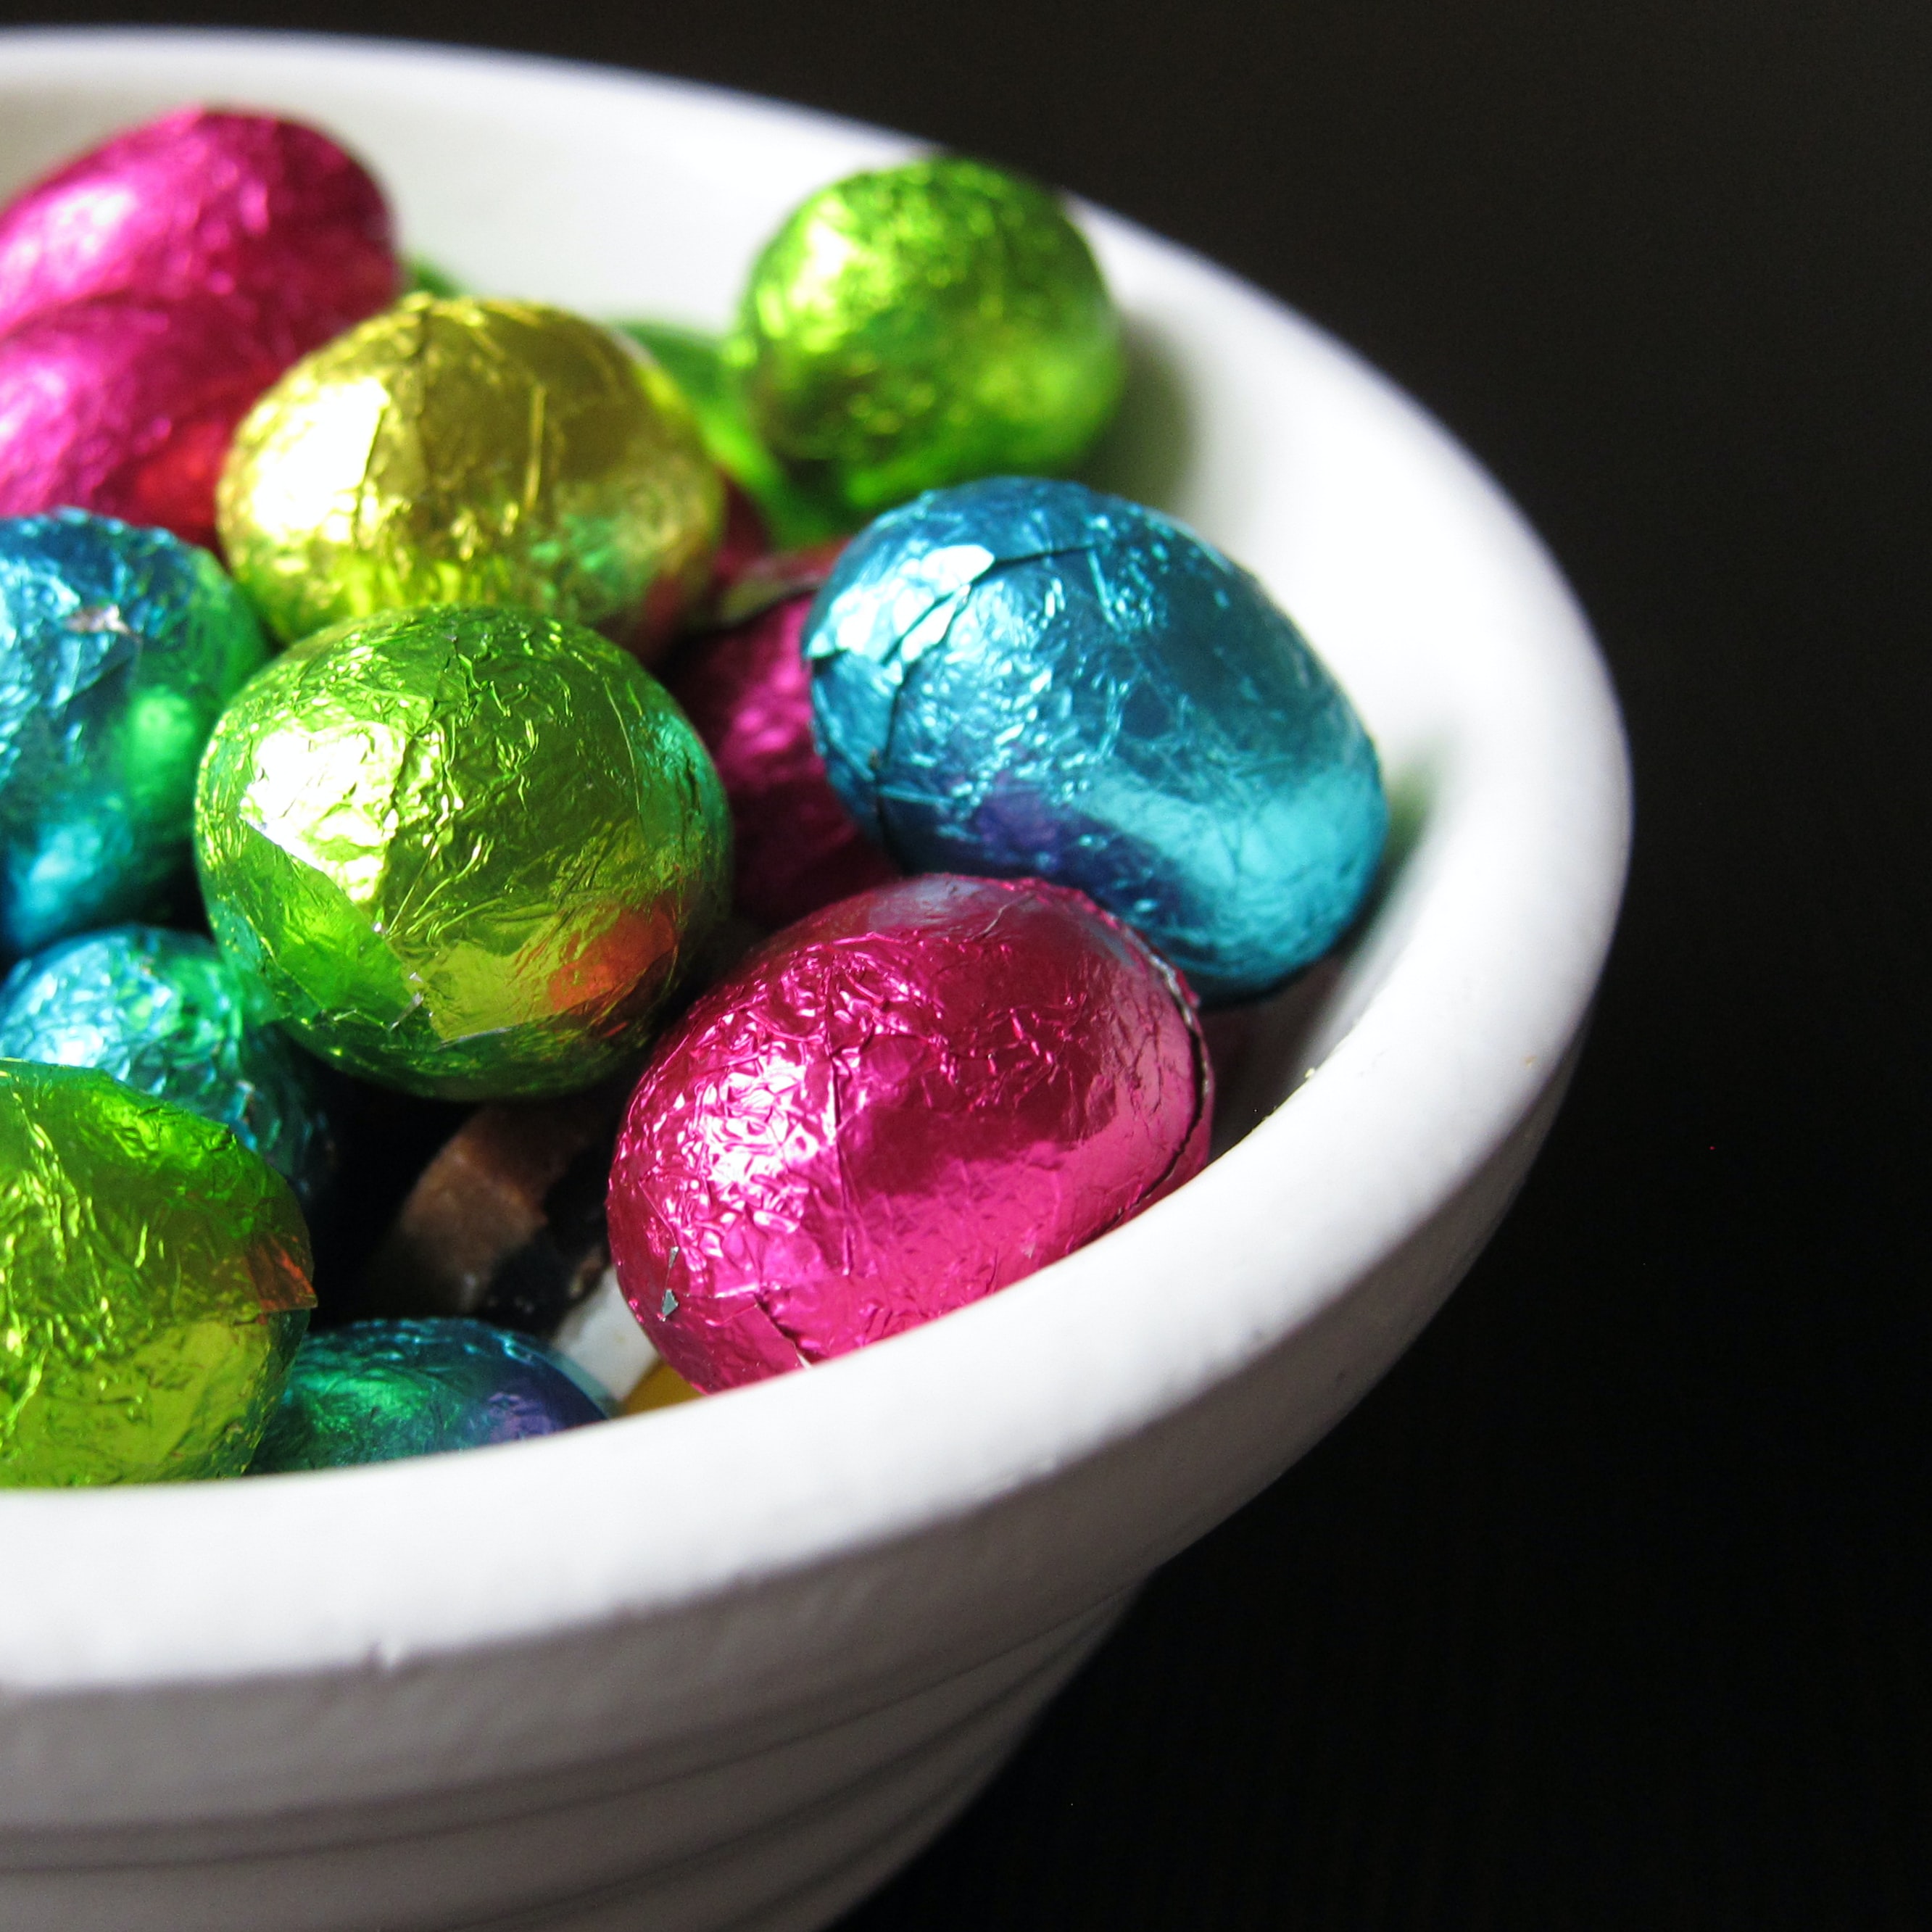 Plato con huevos de chocolates envueltos en papel aluminio de diferentes colores